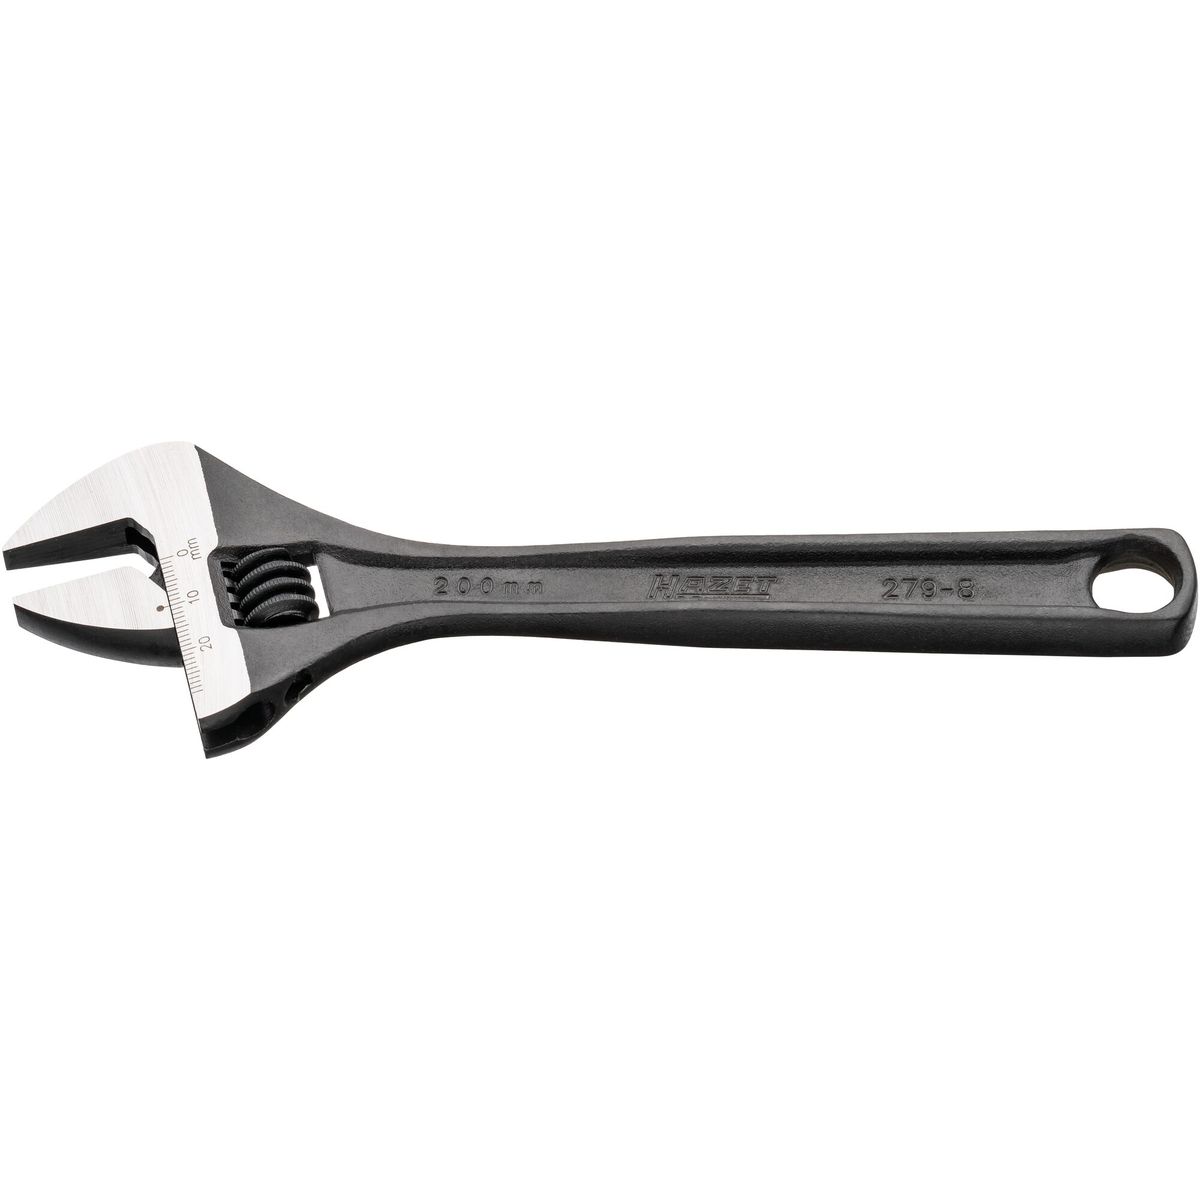 Adjustable Wrench No.279-8 Hazet®